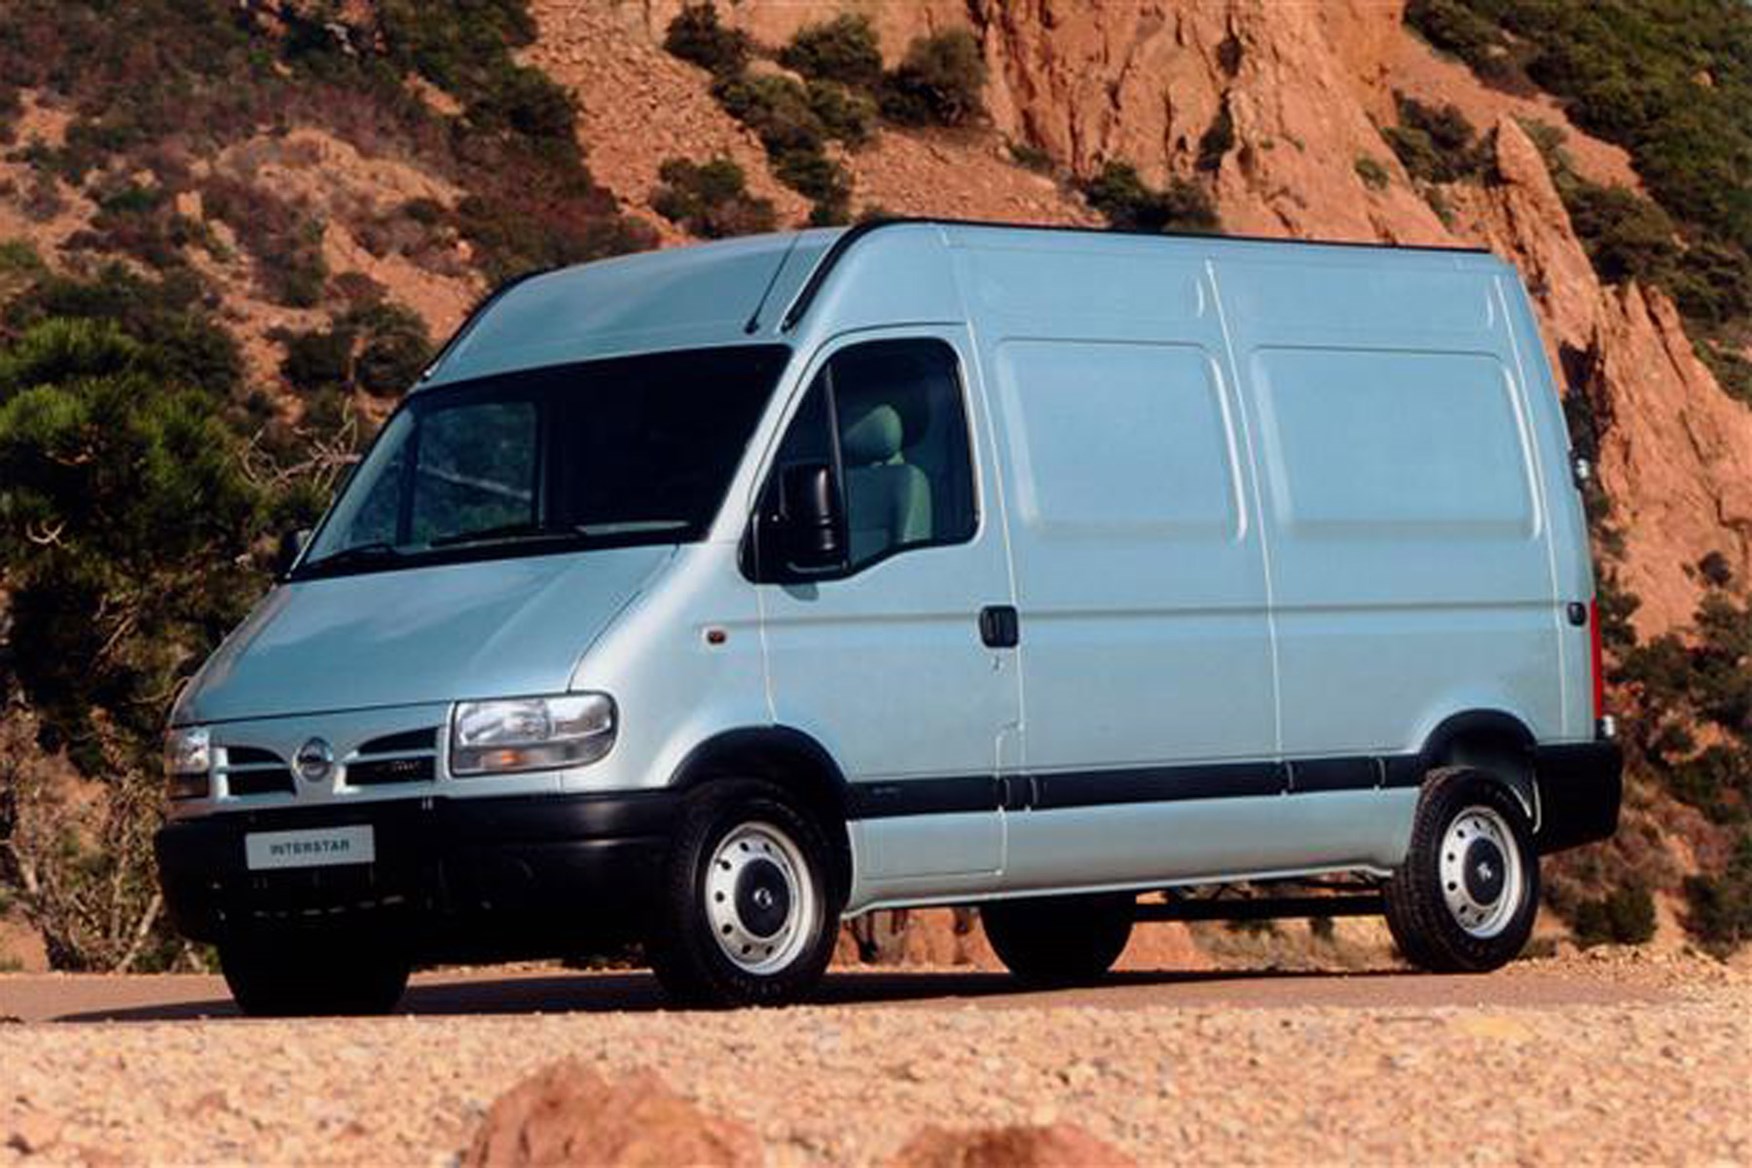 Nissan Interstar review on Parkers Vans - exterior